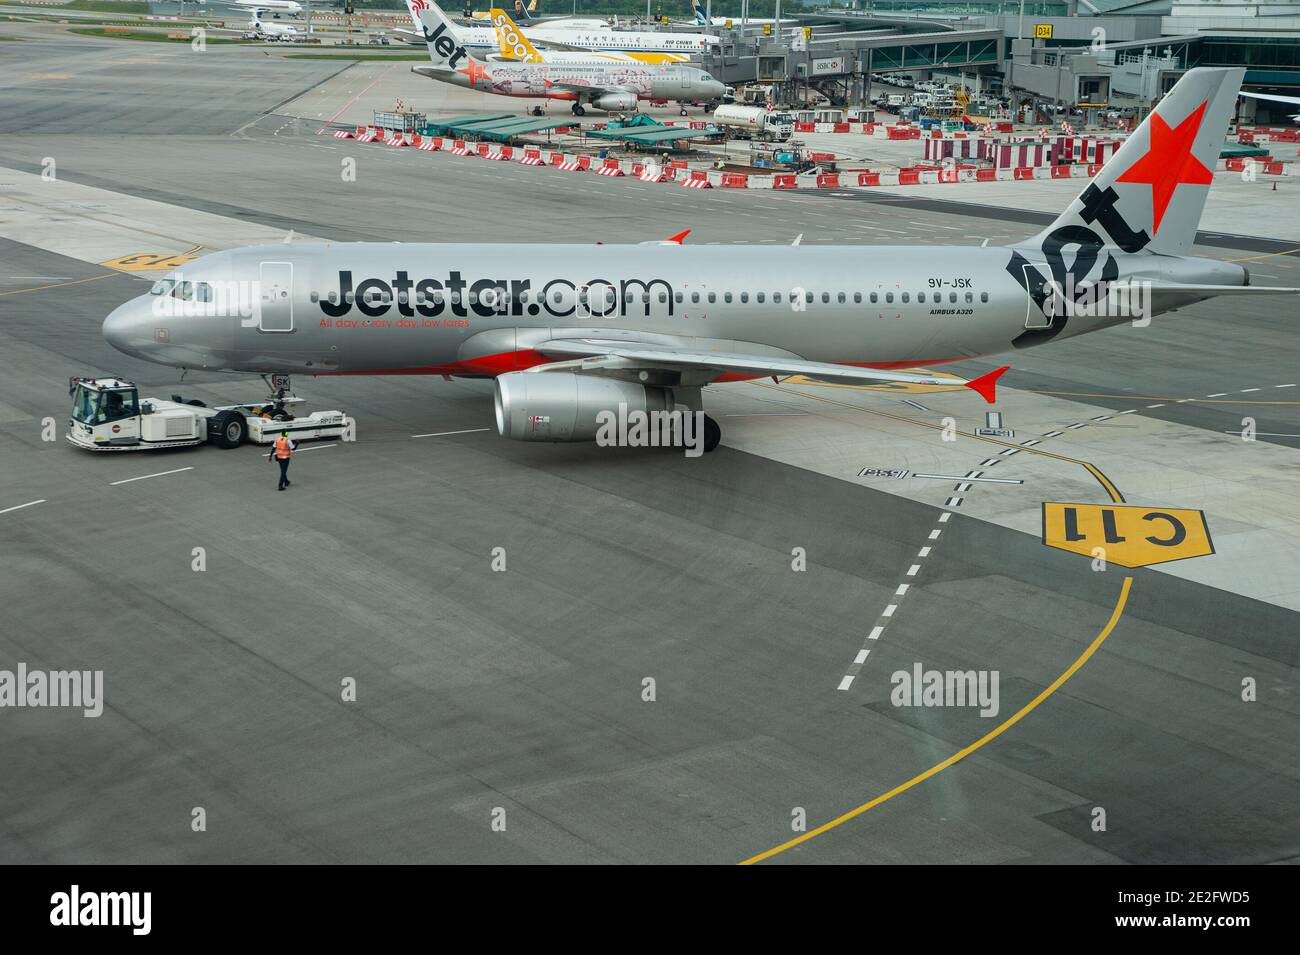 06.12.2019, Singapore, Republic of Singapore, Asia - A Jetstar Asia Airways  Airbus A320-232 passenger plane at Changi International Airport Stock Photo  - Alamy